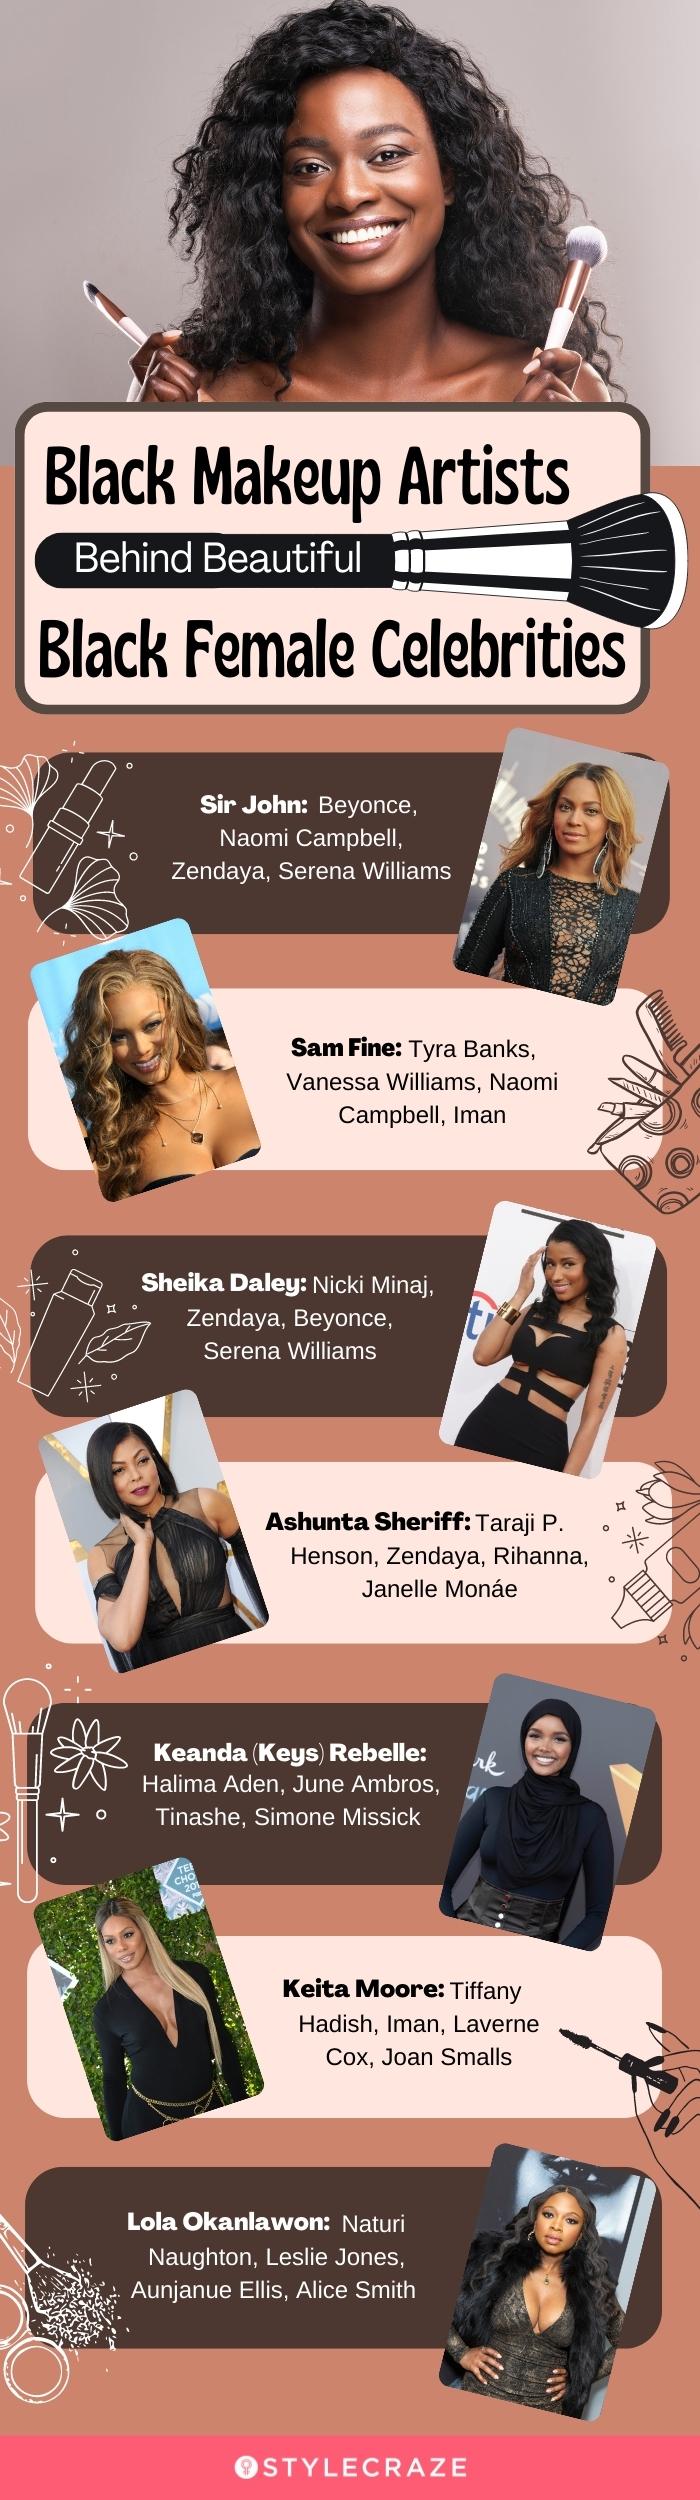 black makeup artists behind beautiful black female celebrities (infographic)